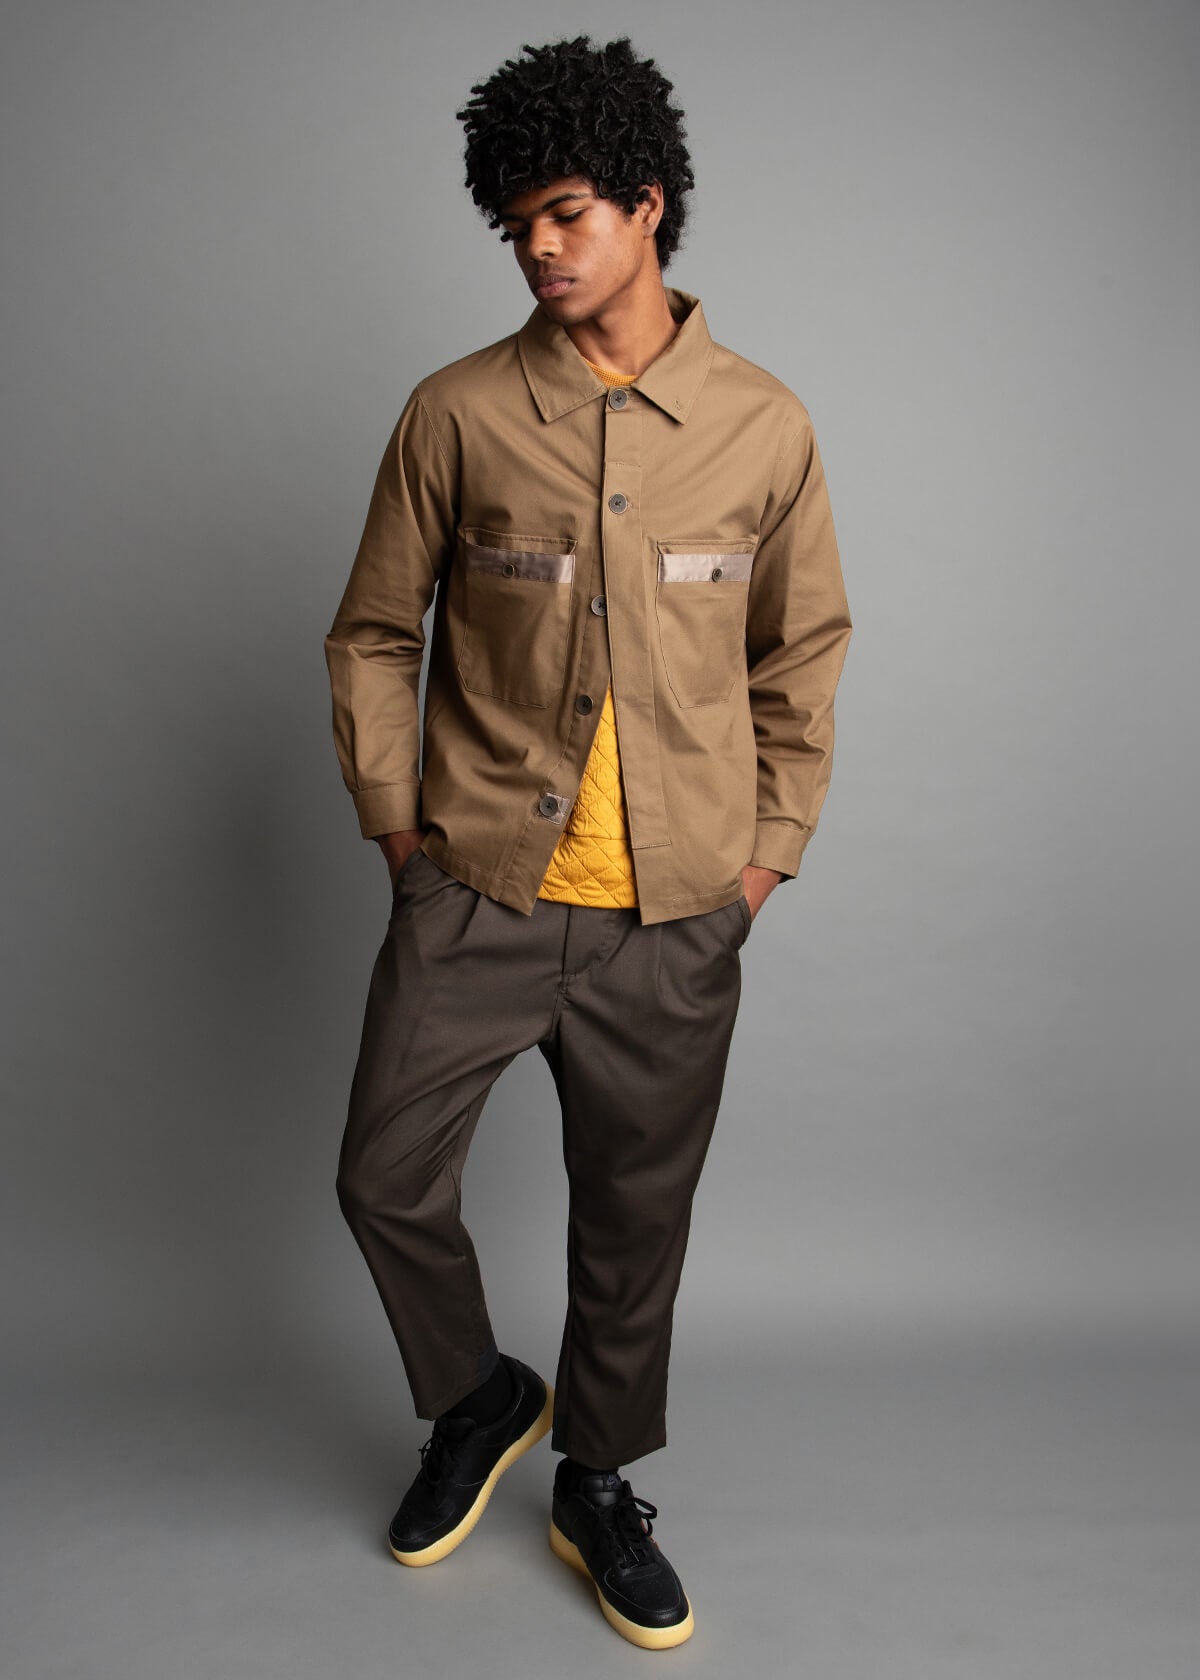 cotton men's jacket in a tan color